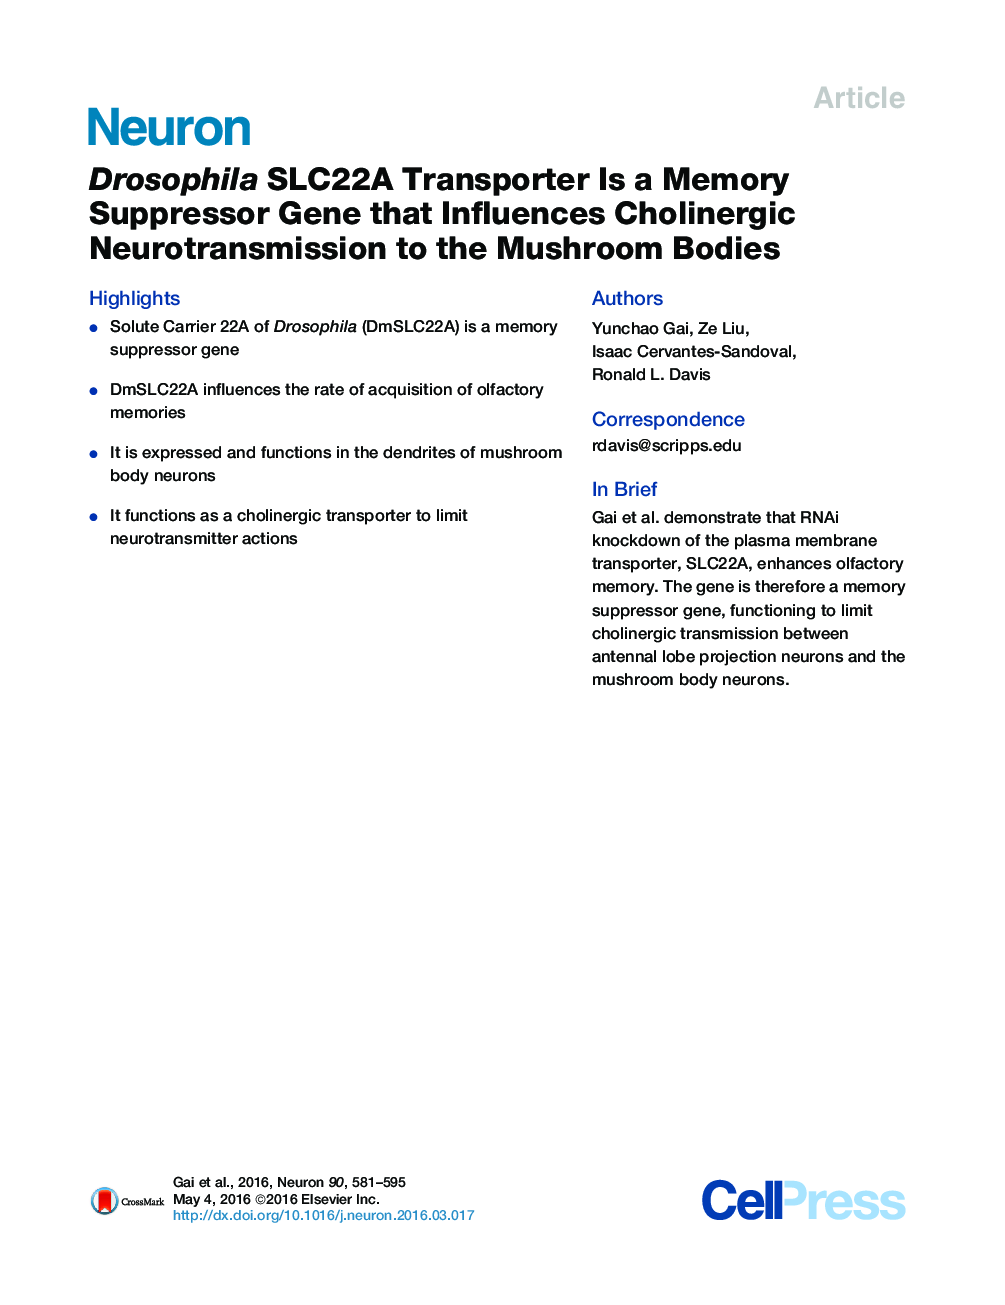 Drosophila SLC22A Transporter Is a Memory Suppressor Gene that Influences Cholinergic Neurotransmission to the Mushroom Bodies